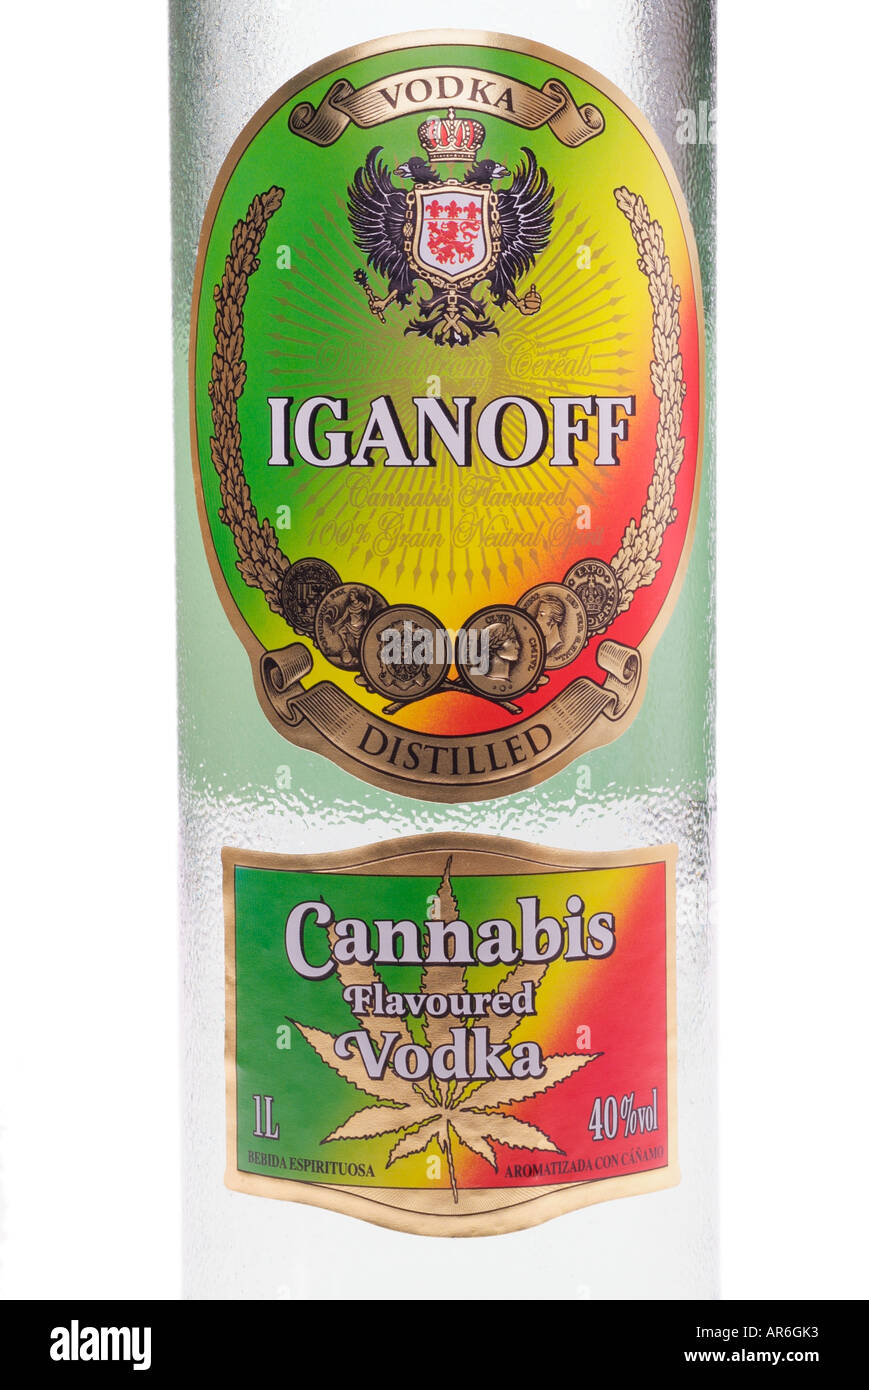 Iganoff cannabis flavoured vodka Portugal  EU European Union Europe Spirit alcohol booze proof pure drink drunk bottle clear Stock Photo